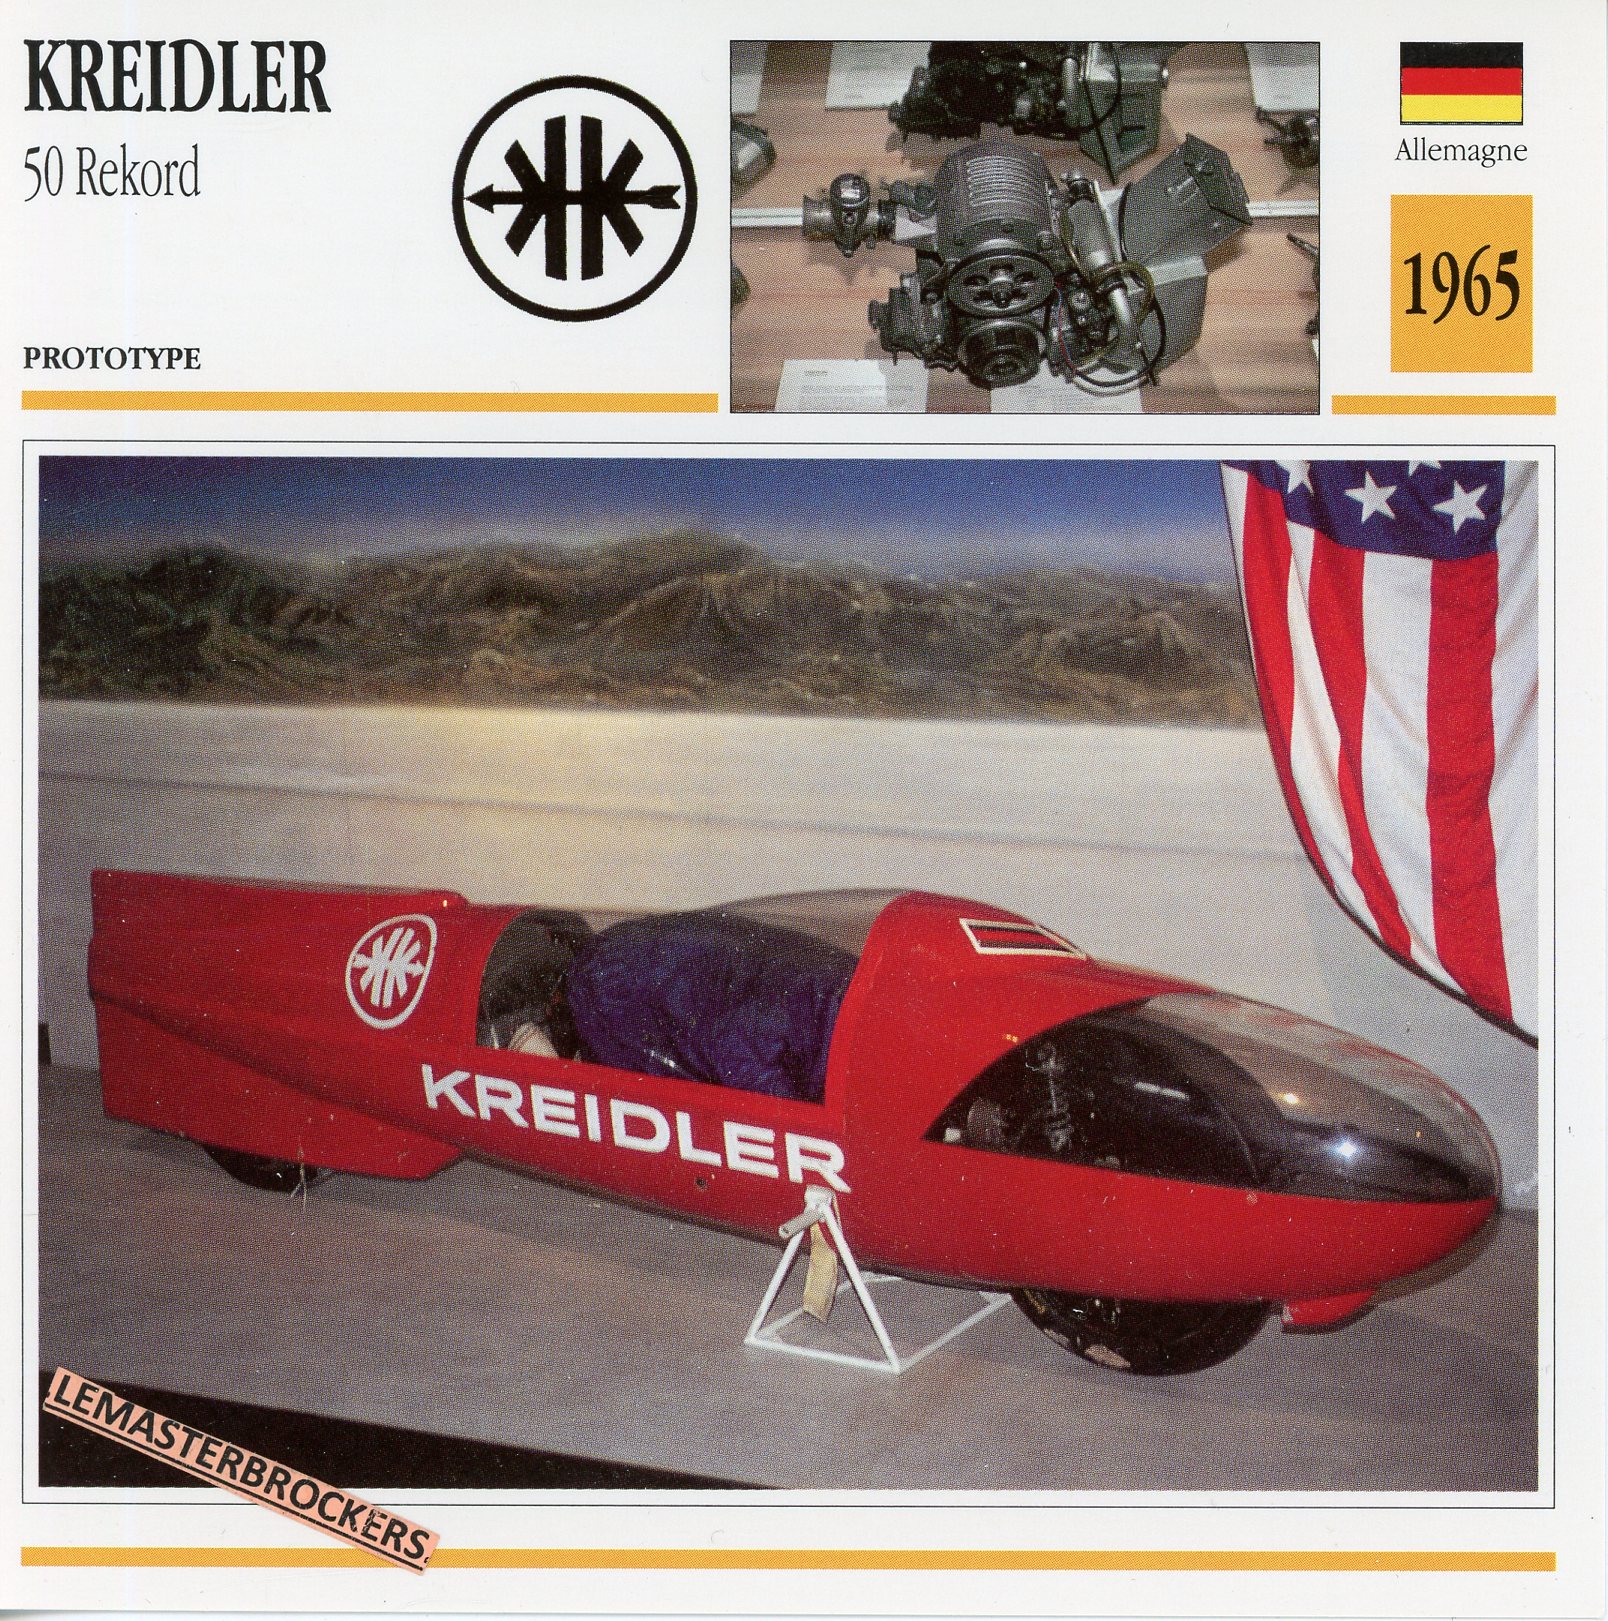 KREIDLER-50-REKORD-1965-LEMASTERBROCKERS-FICHE-RECORD-DE-VITESSE-ATLAS-CARD